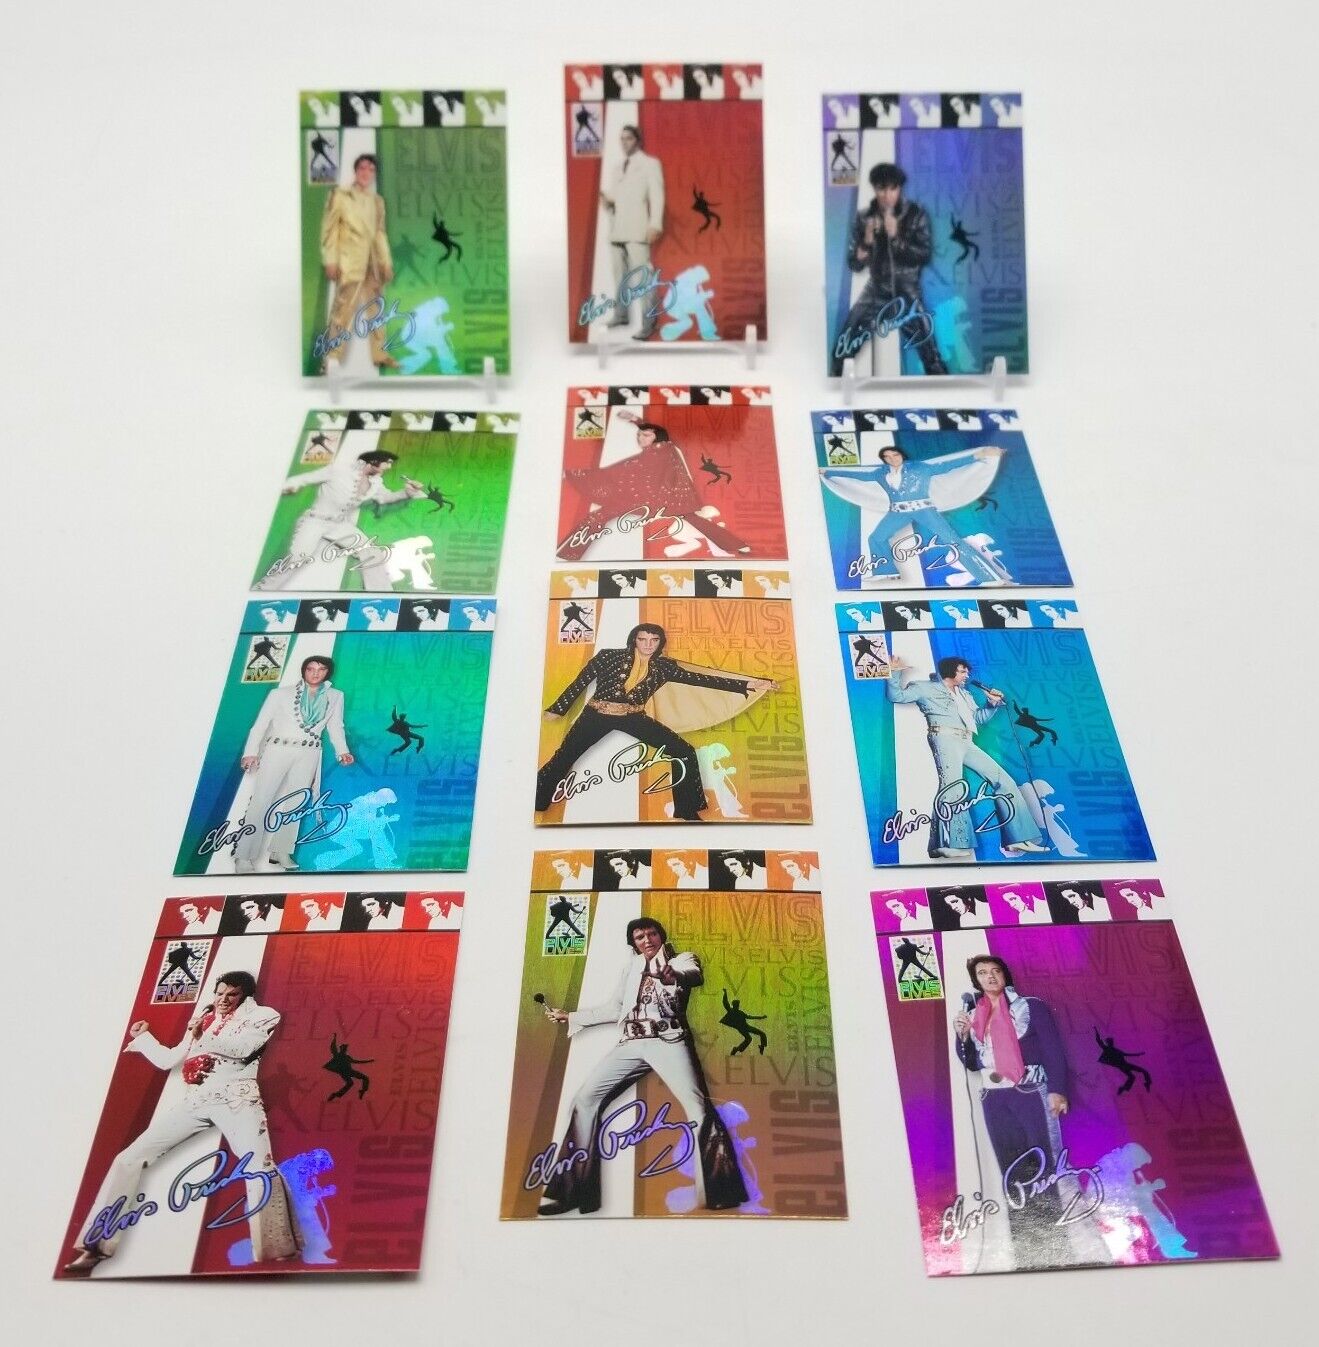 2006 Press Pass Elvis Lives FASHIONS 12 Card Foil Complete Insert Set (1:6 Pack)